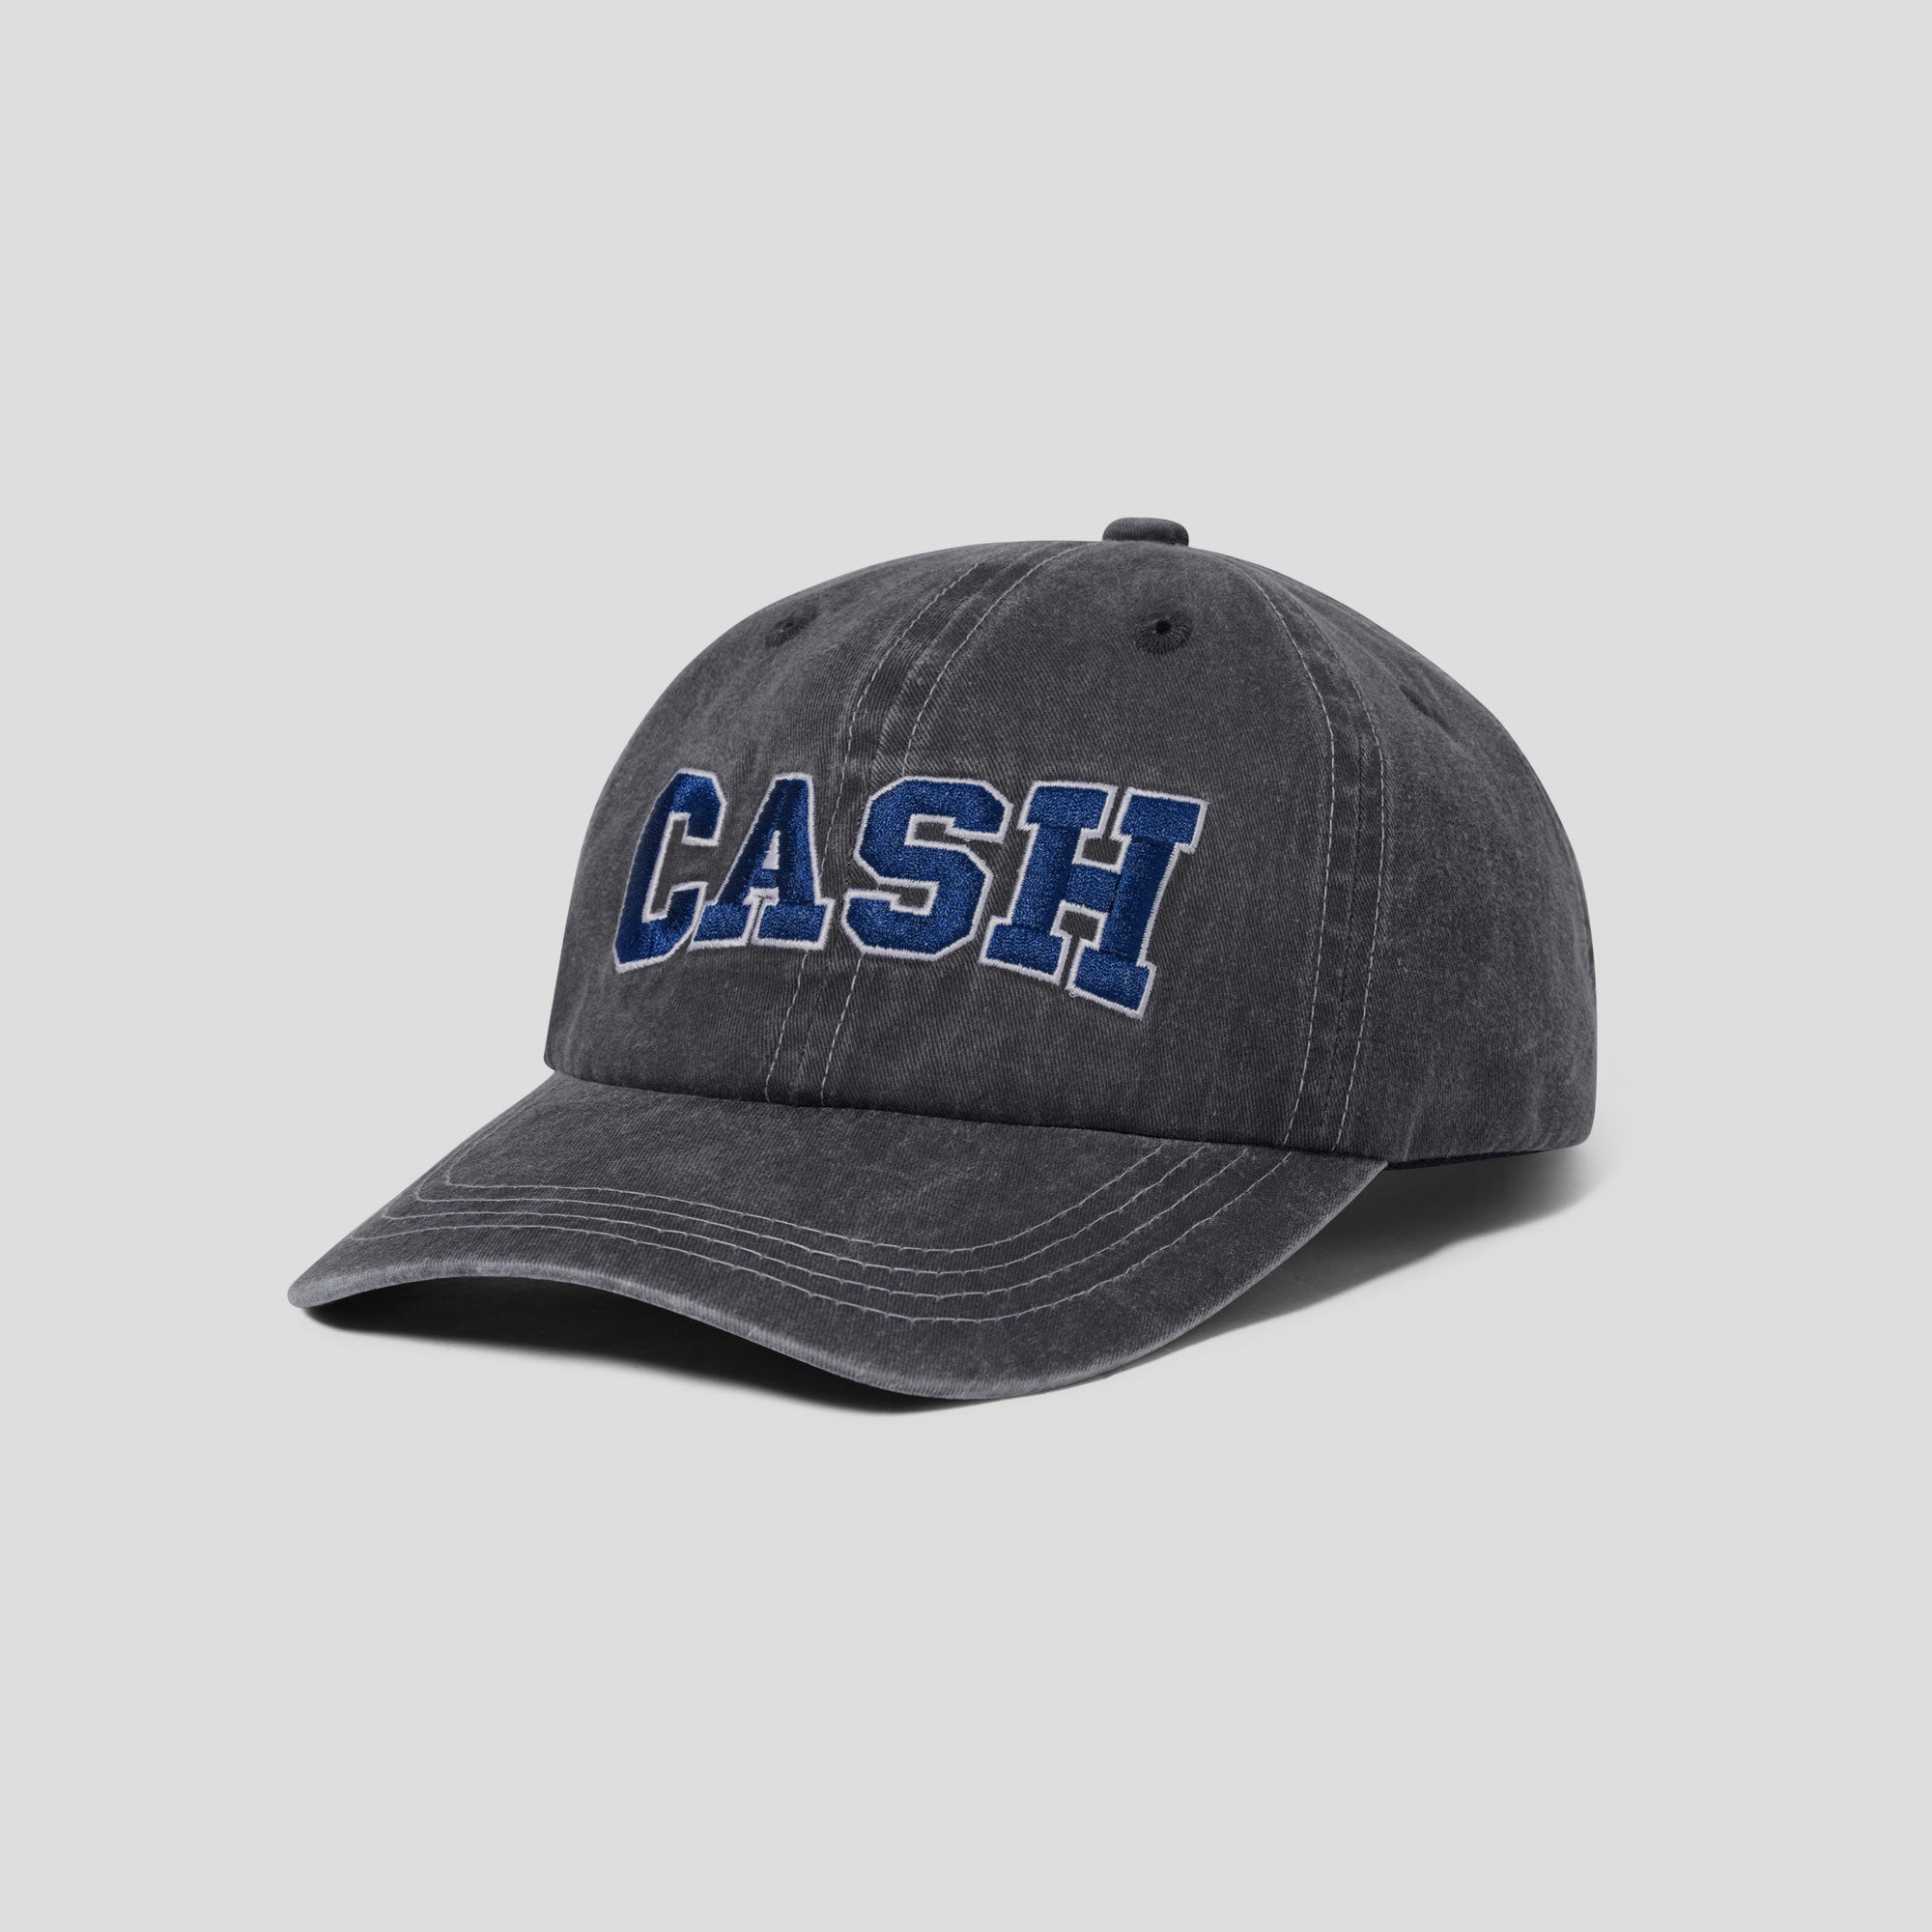 Cash Only Campus 6 Panel Cap - Black